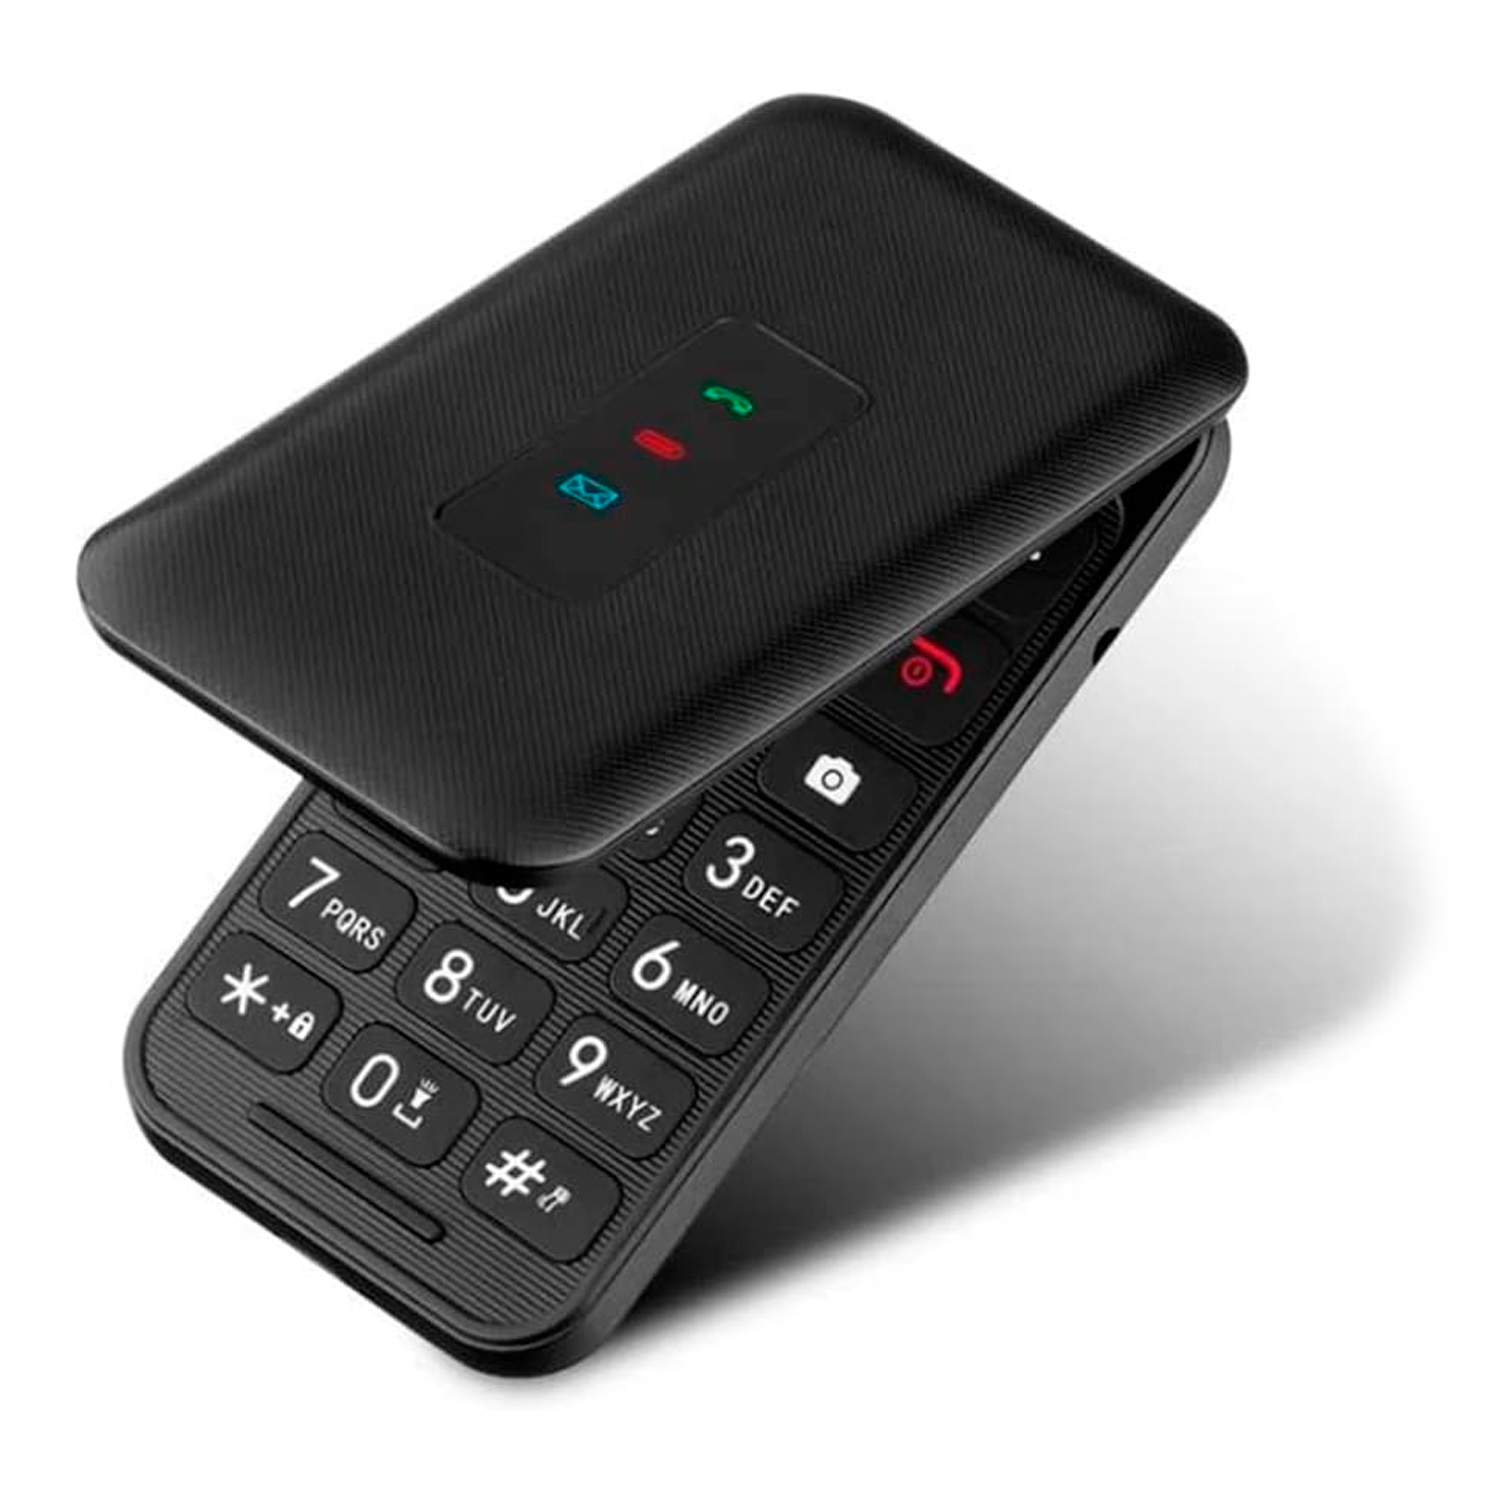 Celular Multilaser Flip Vita 3G P9140 Dual SIM Tela 1.3" - Preto (Anatel)
